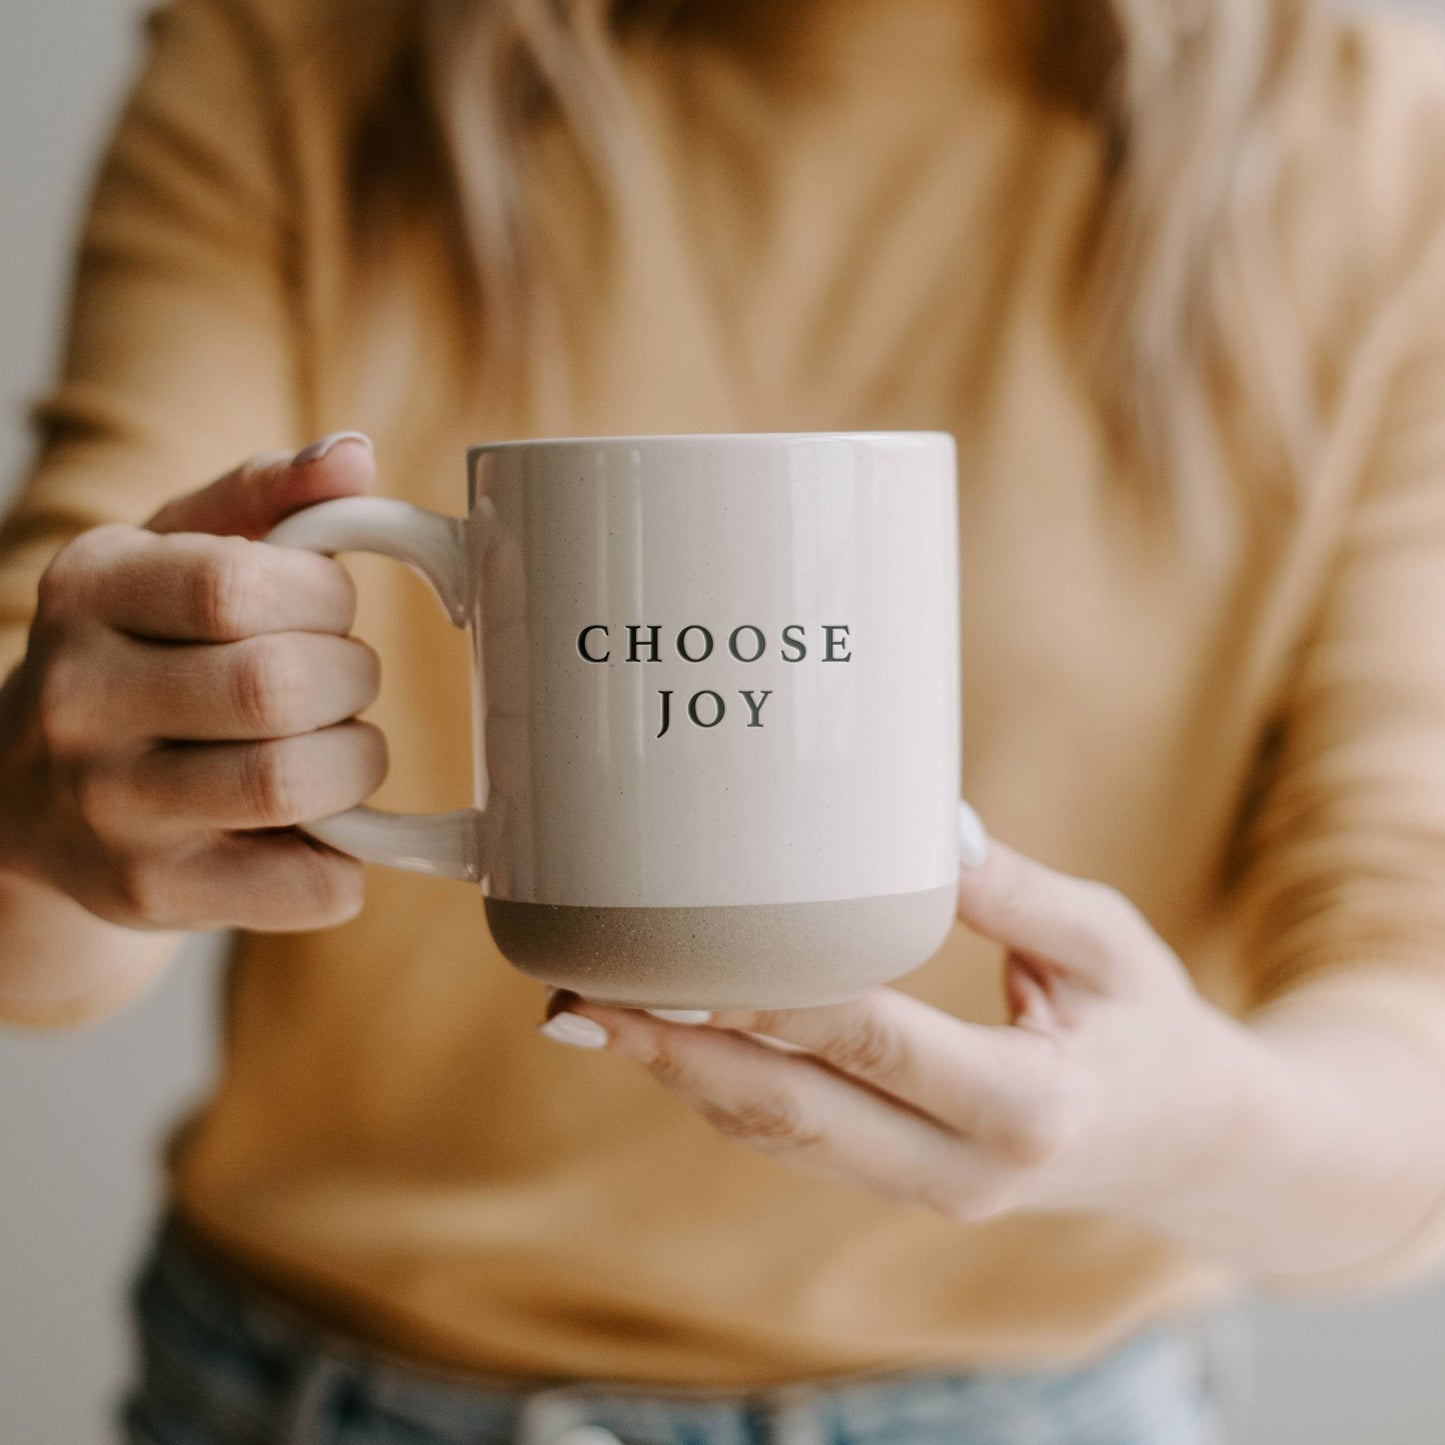 Choose Joy Stoneware Coffee Mug -Christmas Home Decor & Gift